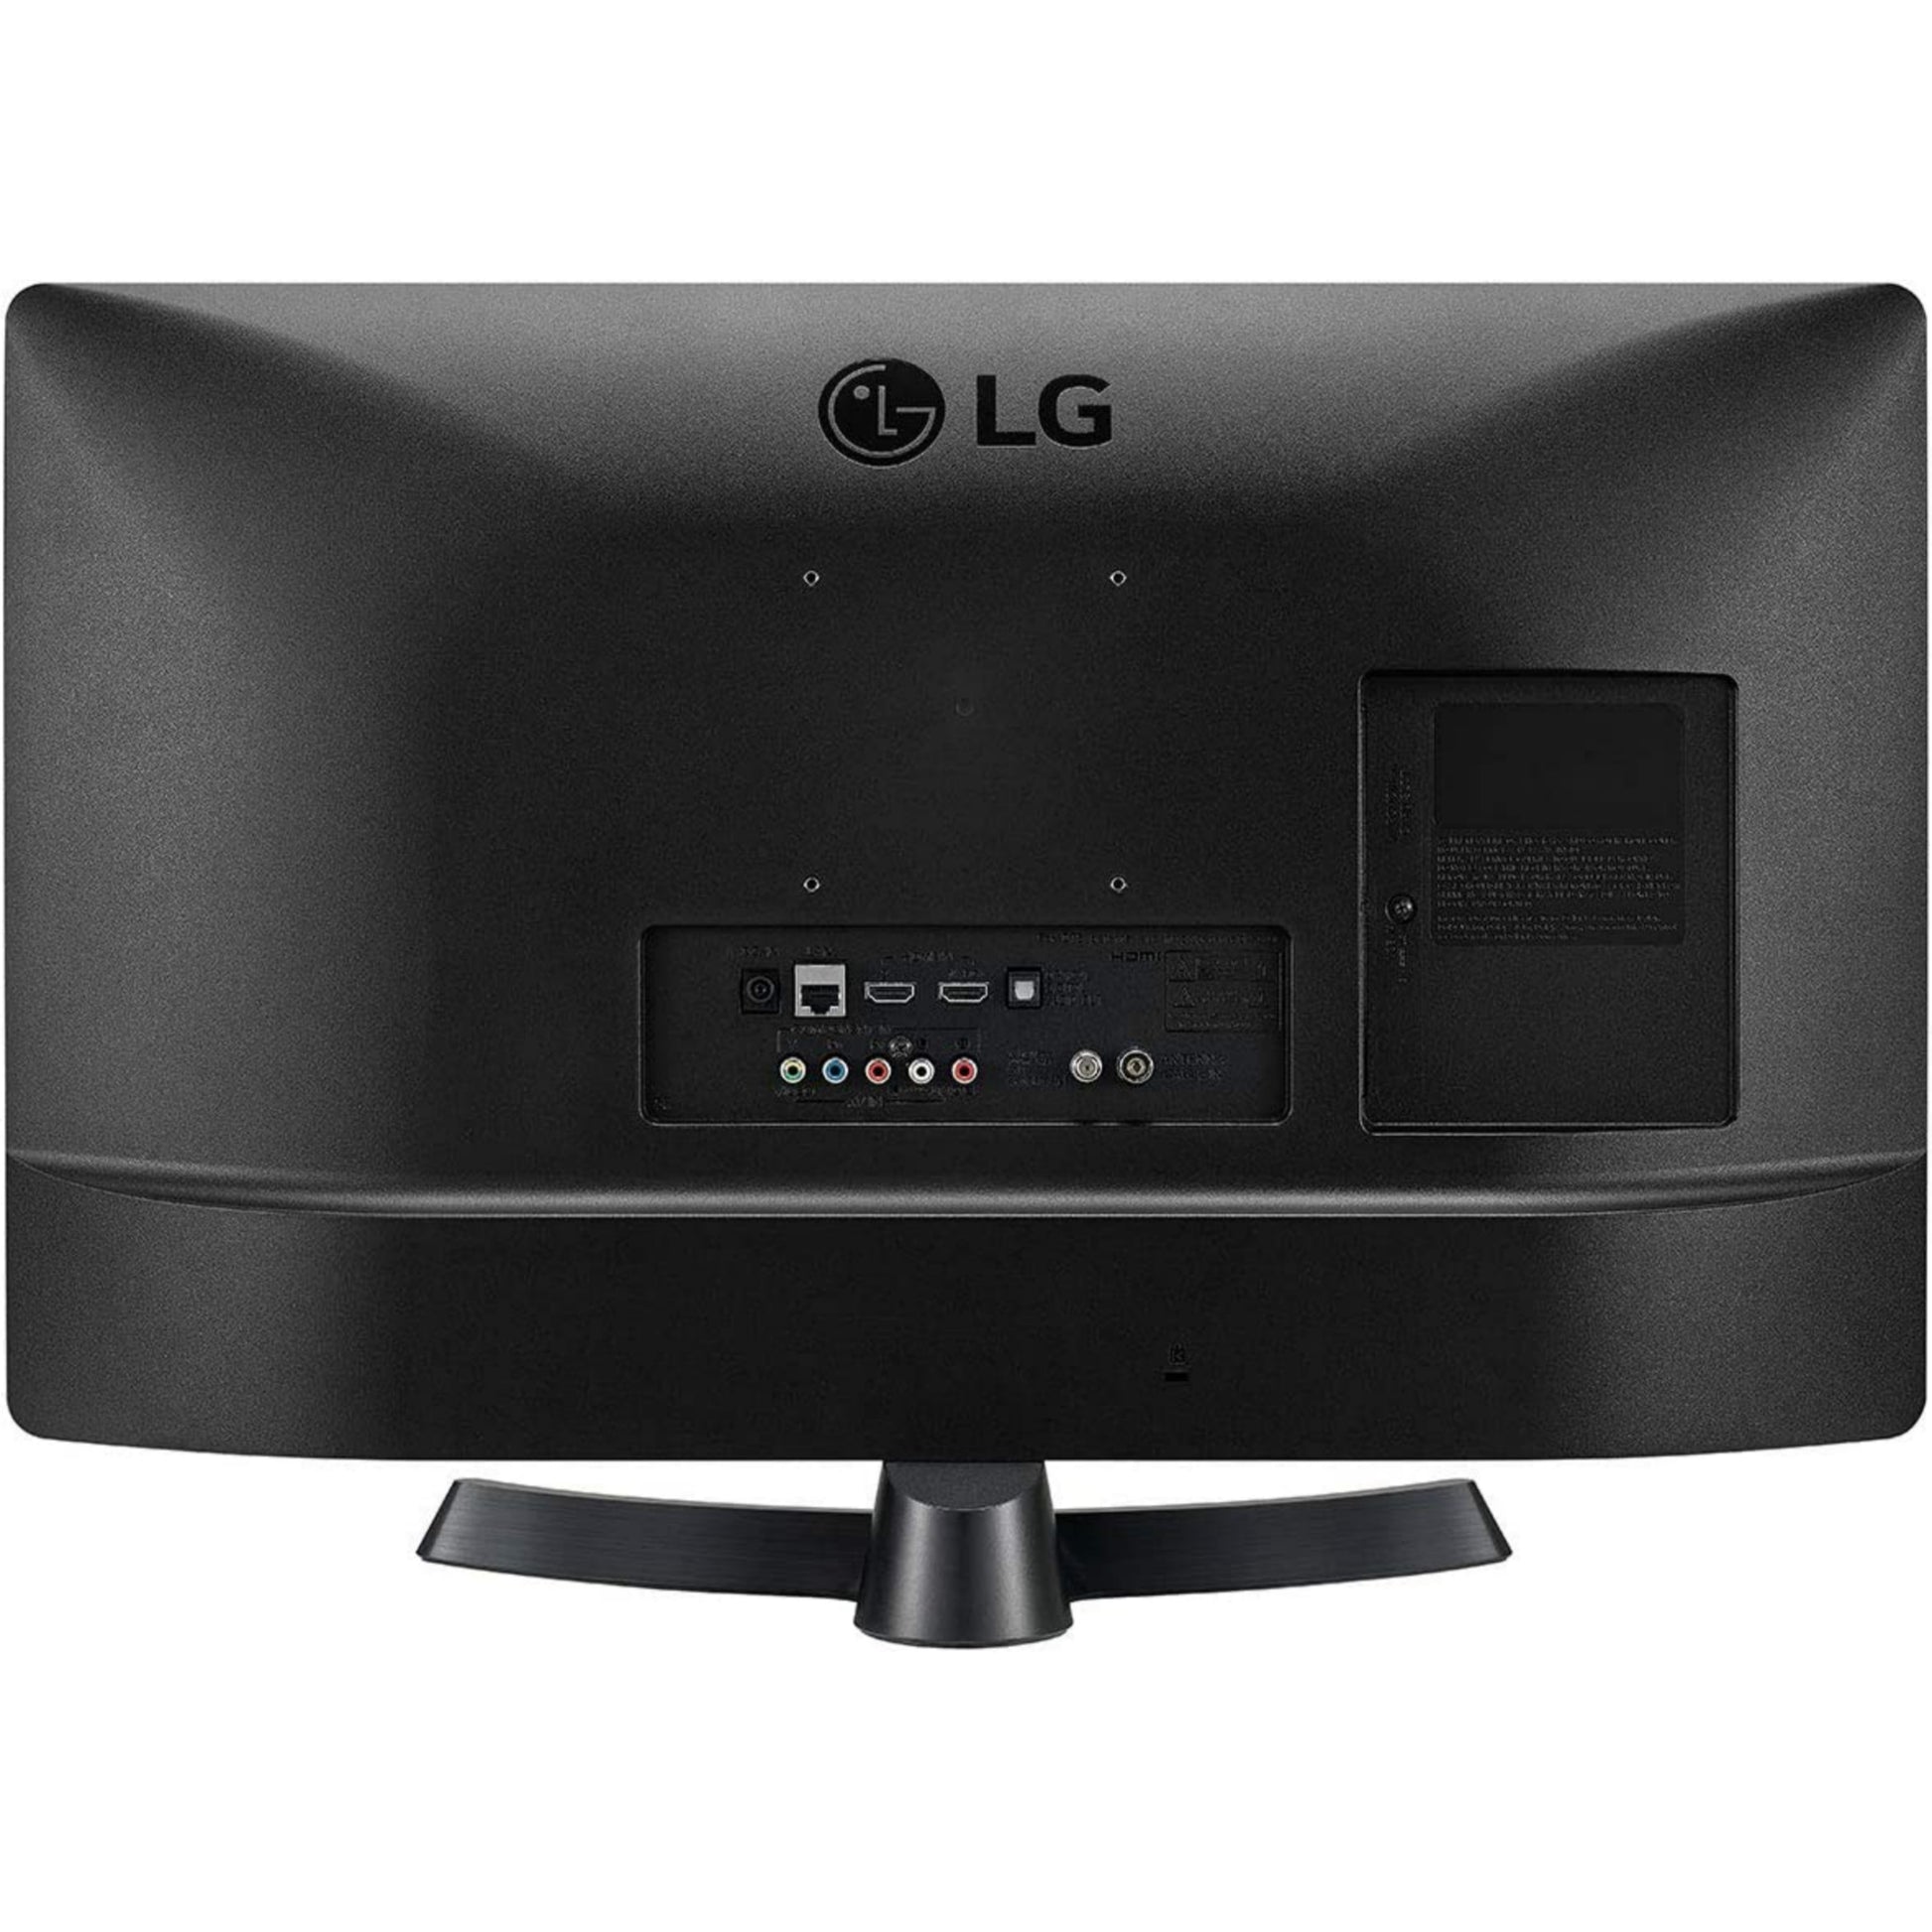 LG 28TL510S-PZ - Monitor Smart TV de 70cm (28) con Pantalla LED